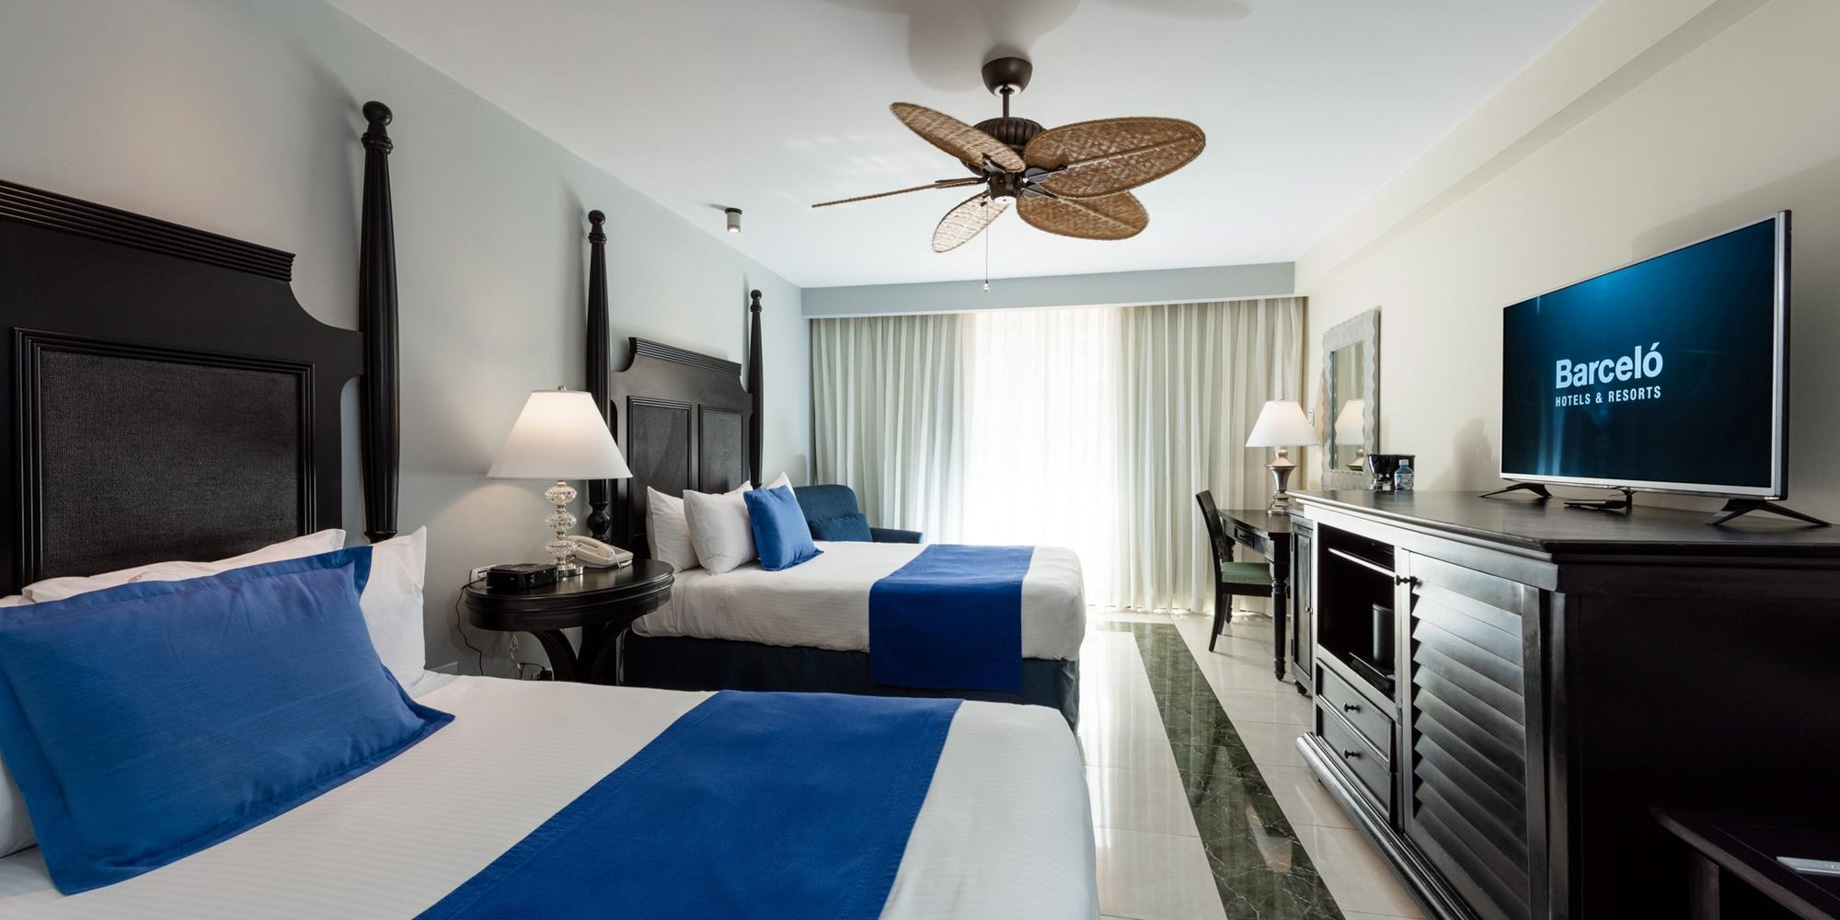 Barceló Aruba Palm Beach Resort – Noord, Aruba – Two Connecting Rooms